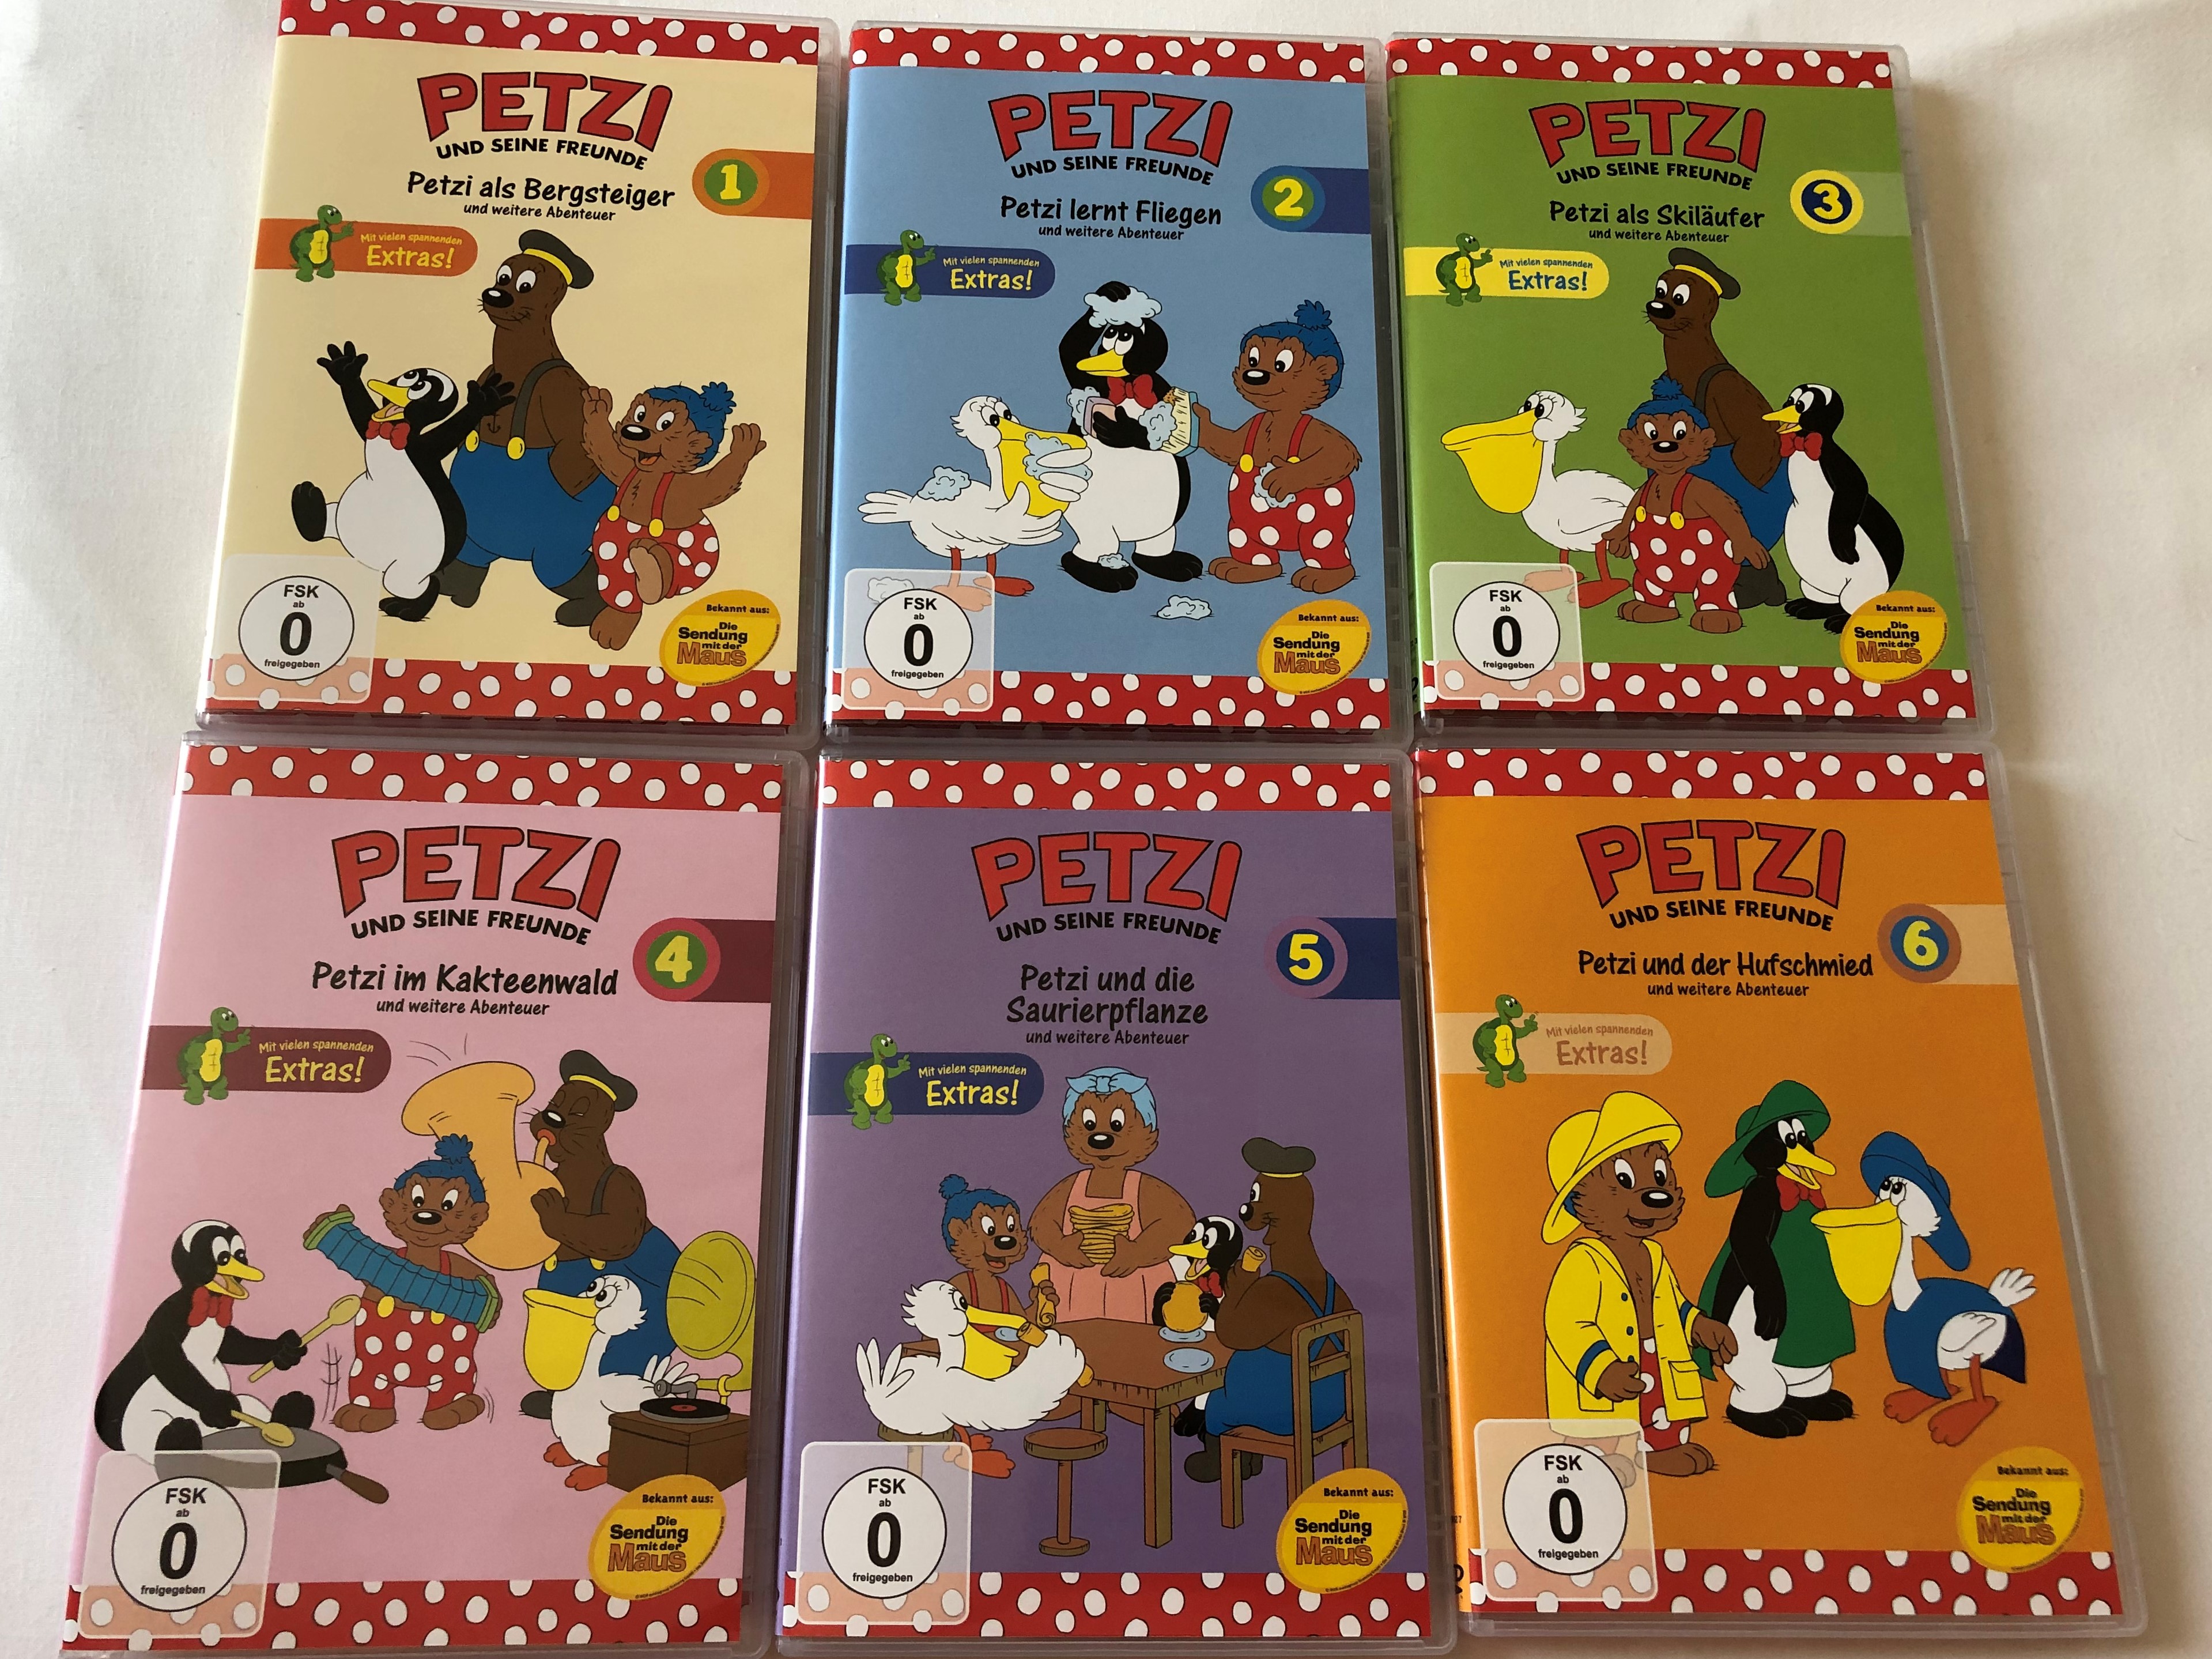 Petzi und Seine Freunde DVD SET 2004 Petzi and his friends / 6 discs - 52  episodes / Classic German Cartoon / The Complete Series in one Box! -  bibleinmylanguage